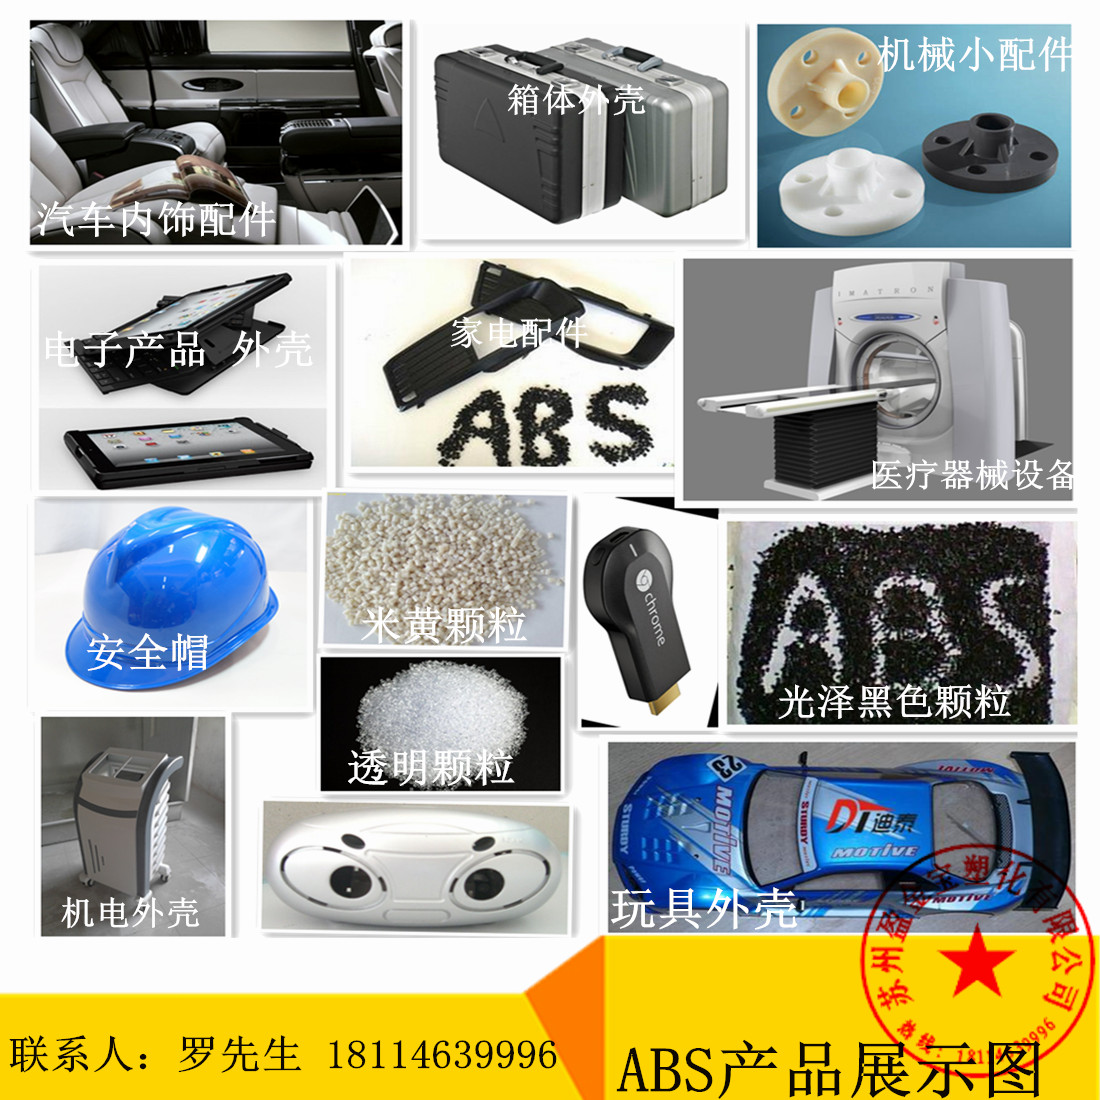 ABS/DG417/天津大沽 中等抗冲击 本色 家电器材  汽车部件 塑胶原料